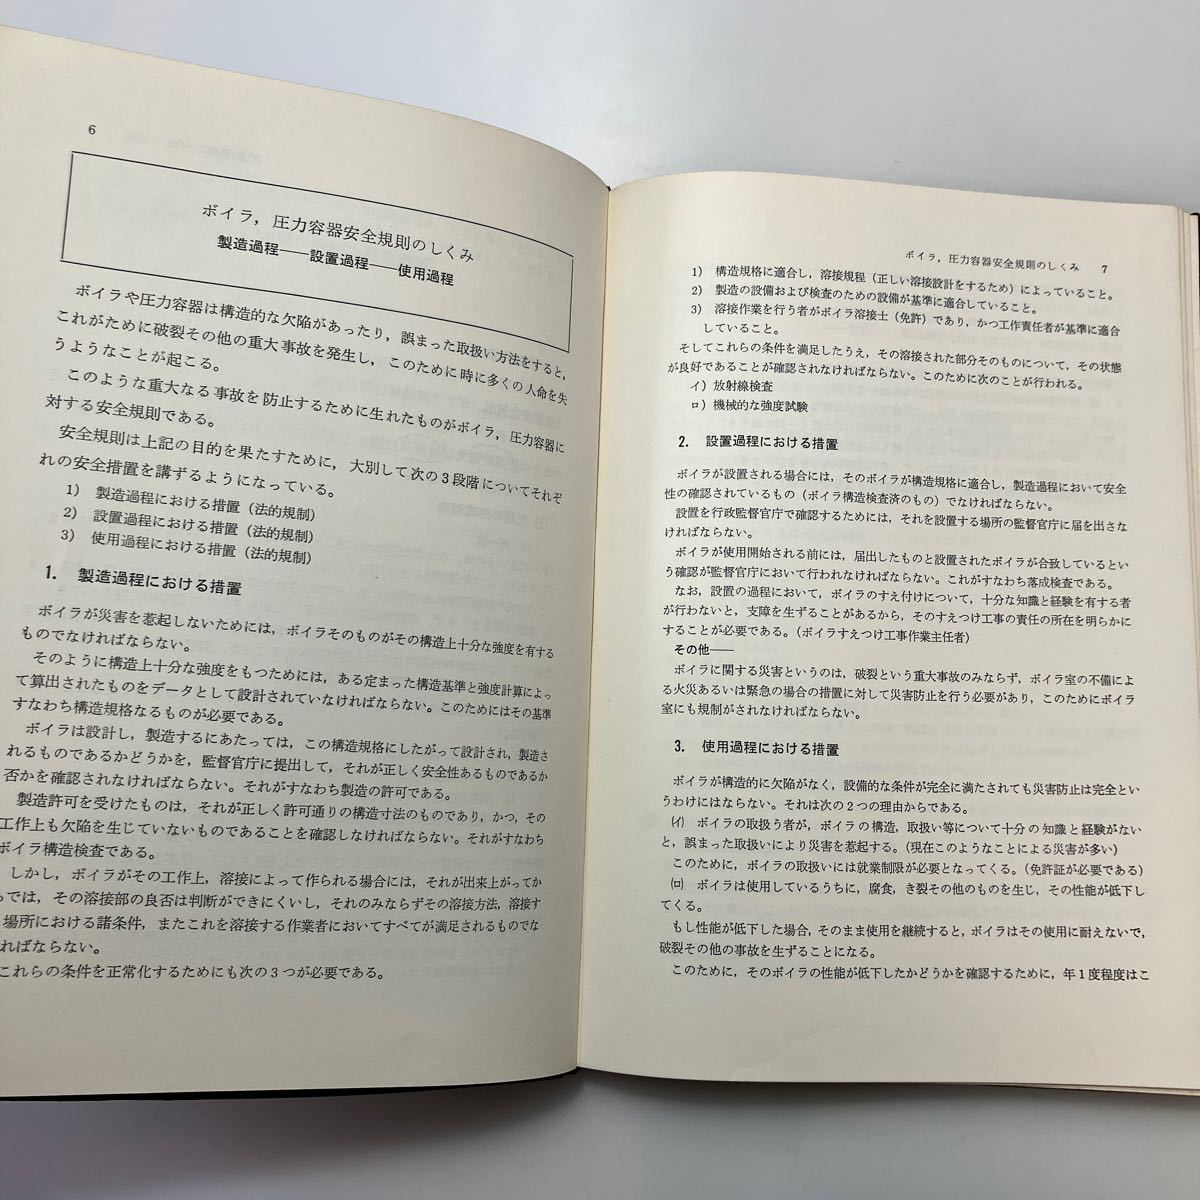 zaa-525♪ボイラに関する法令の学び 　ボイラエンジニアリング研究会(著) 　槙書店　1973/7/30_画像5